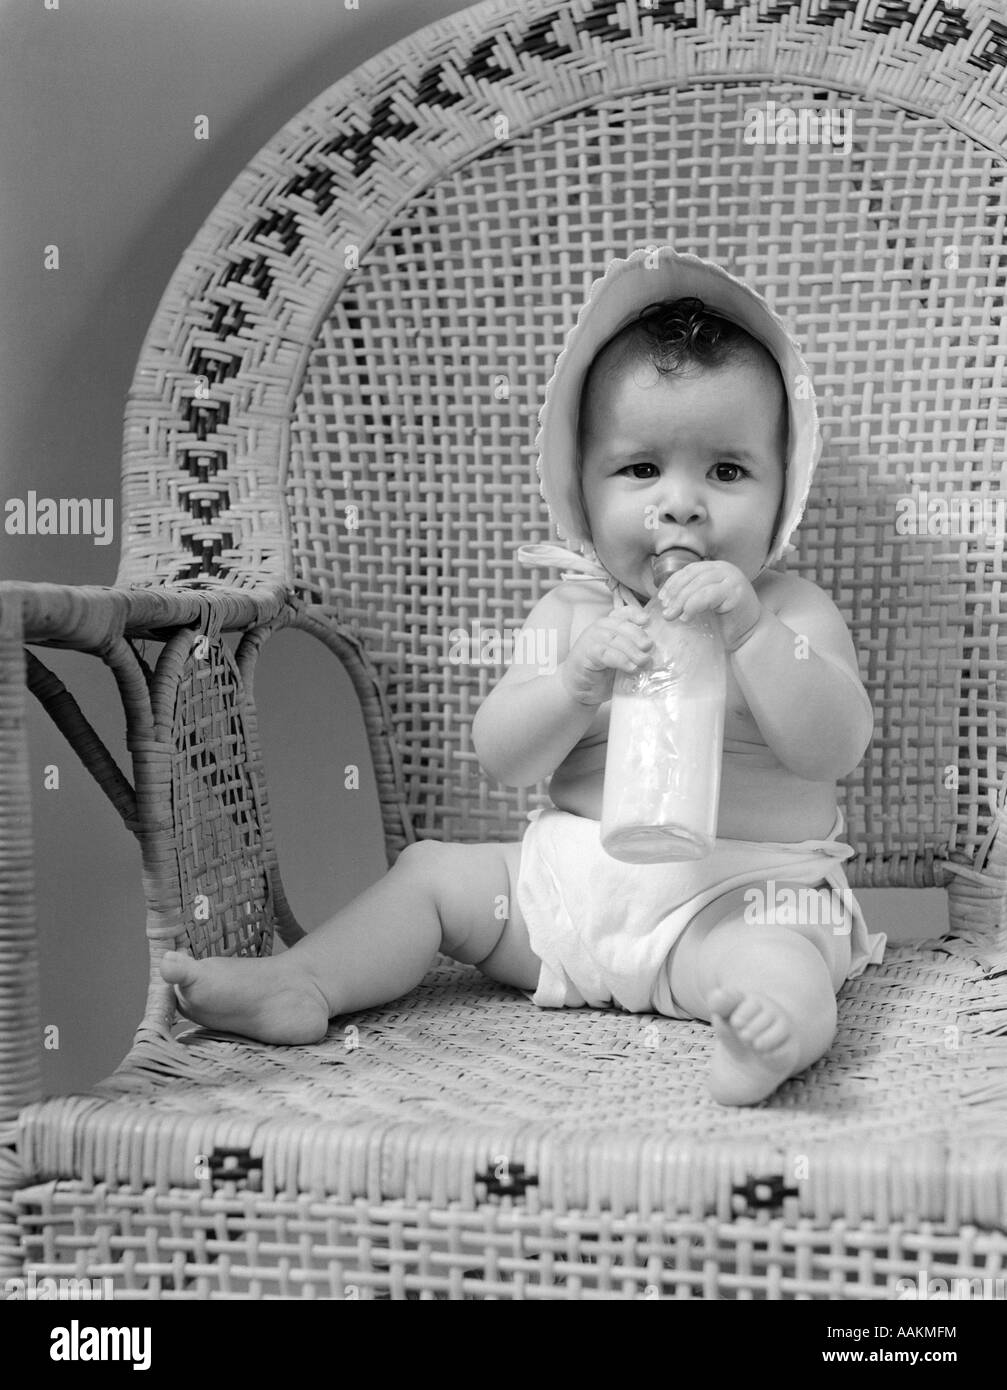 1940s BABY SITTING IN WICKER CHAIR SUCKING MILK BOTTLE Stock Photo